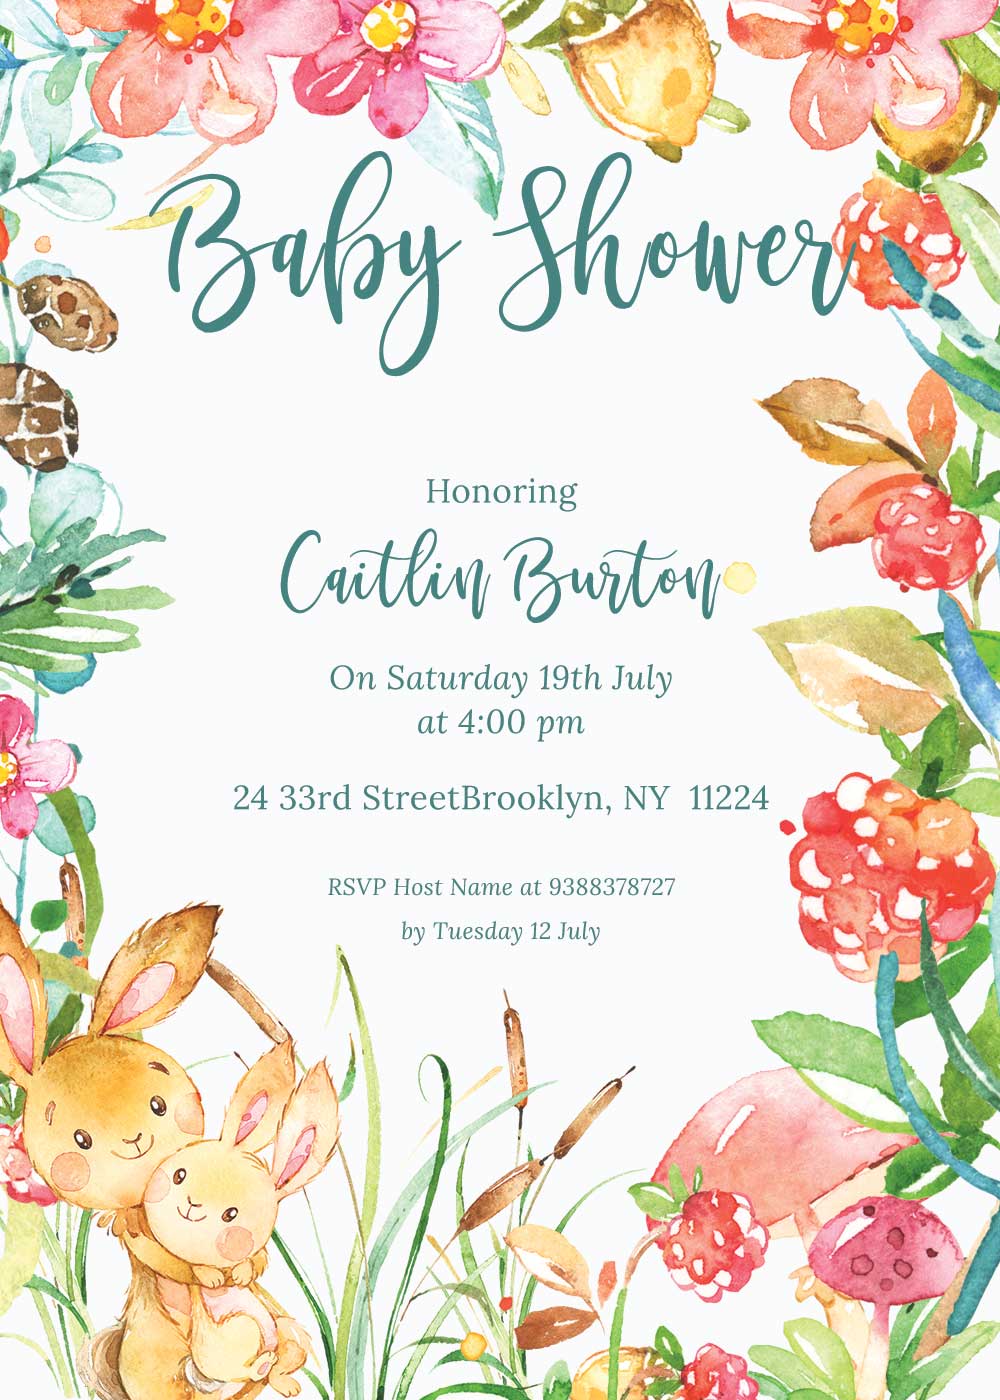 Baby shower invitations - Raspberry Theme